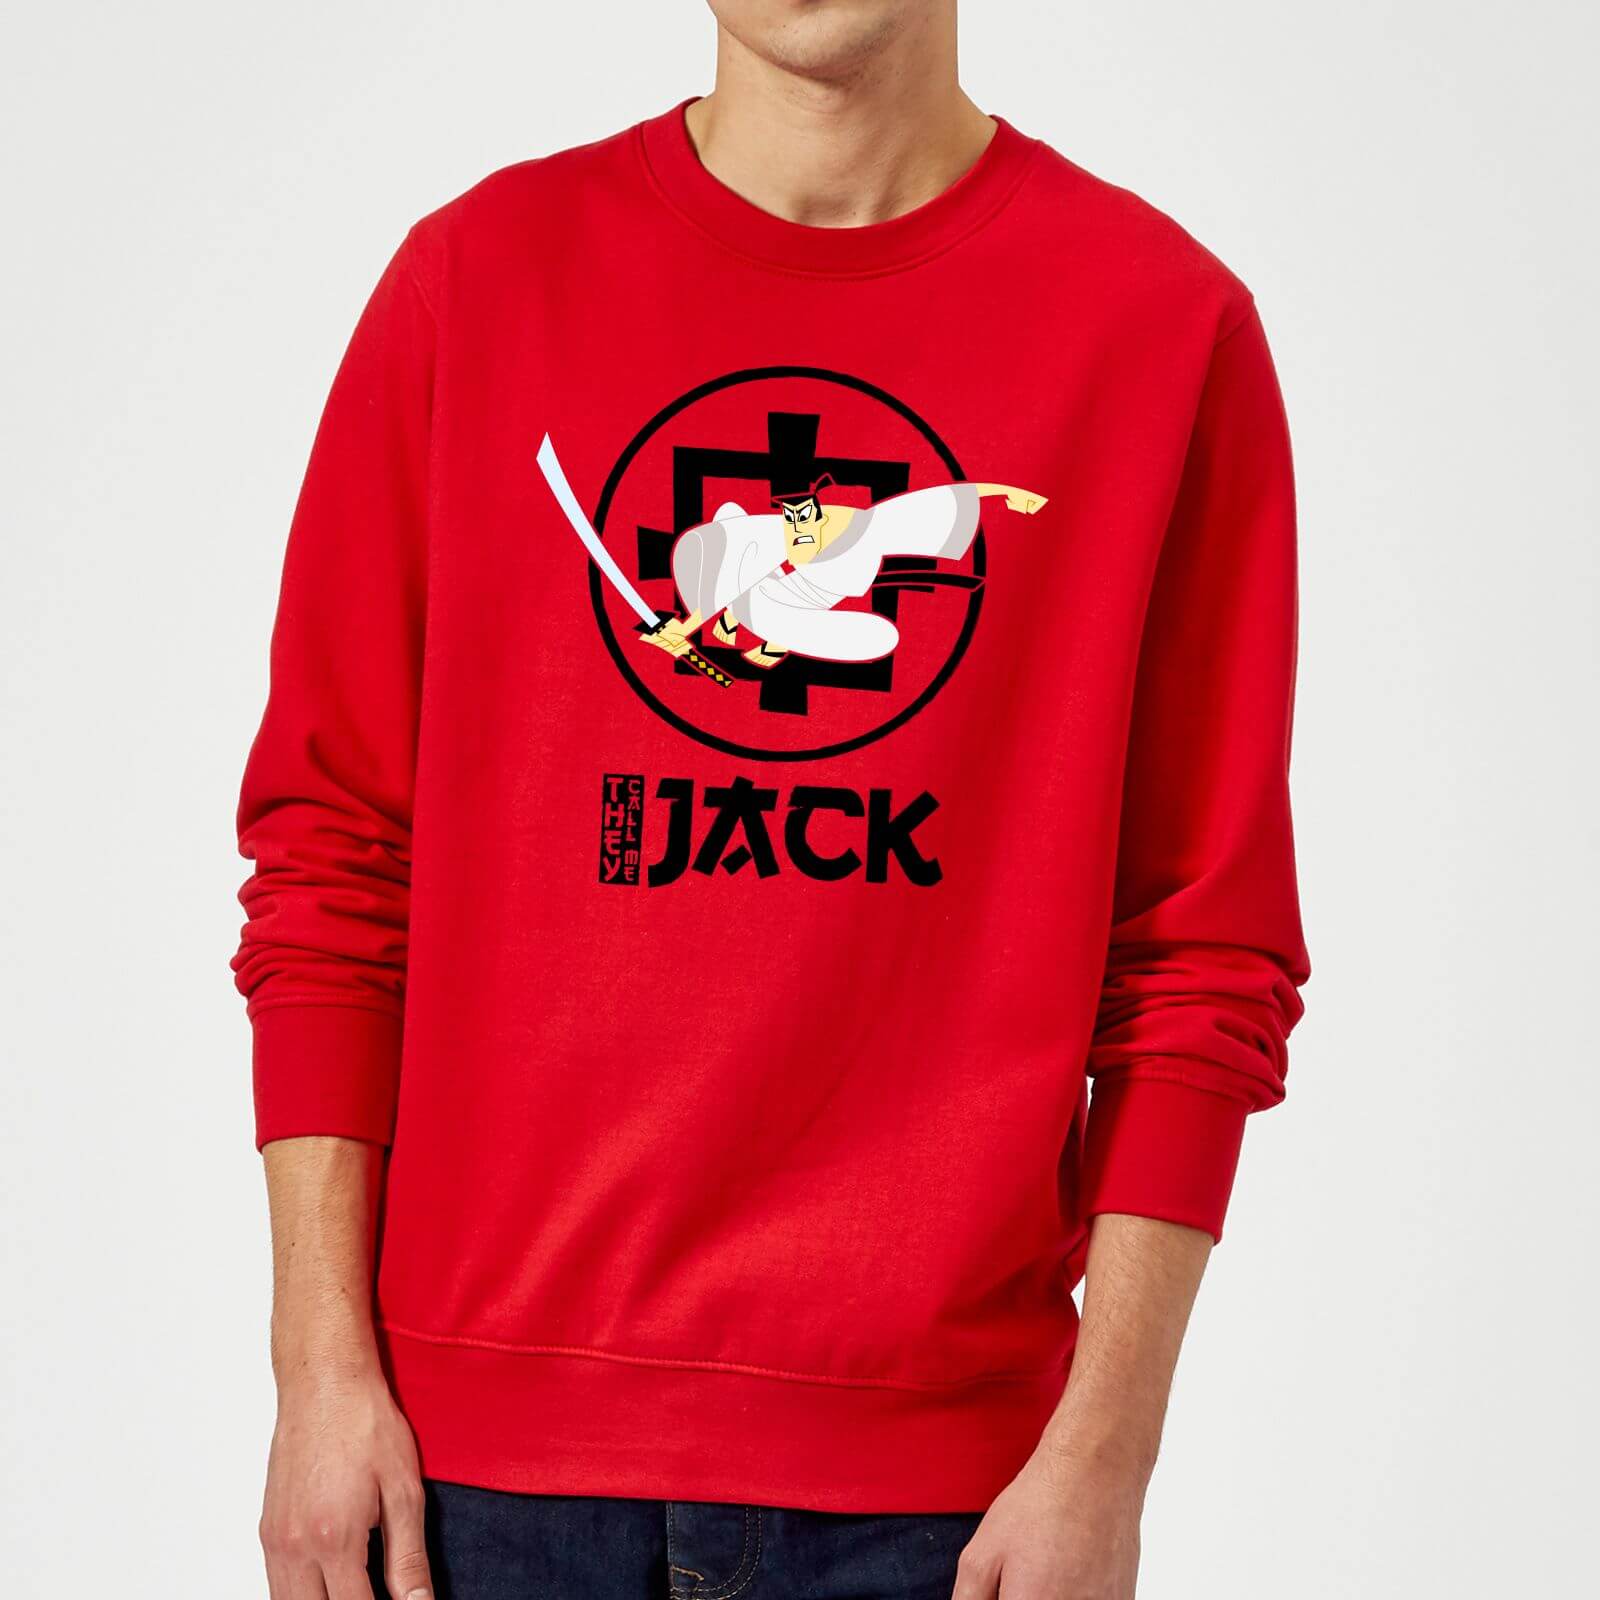 Samurai Jack They Call Me Jack Sweatshirt - Red - M - Red